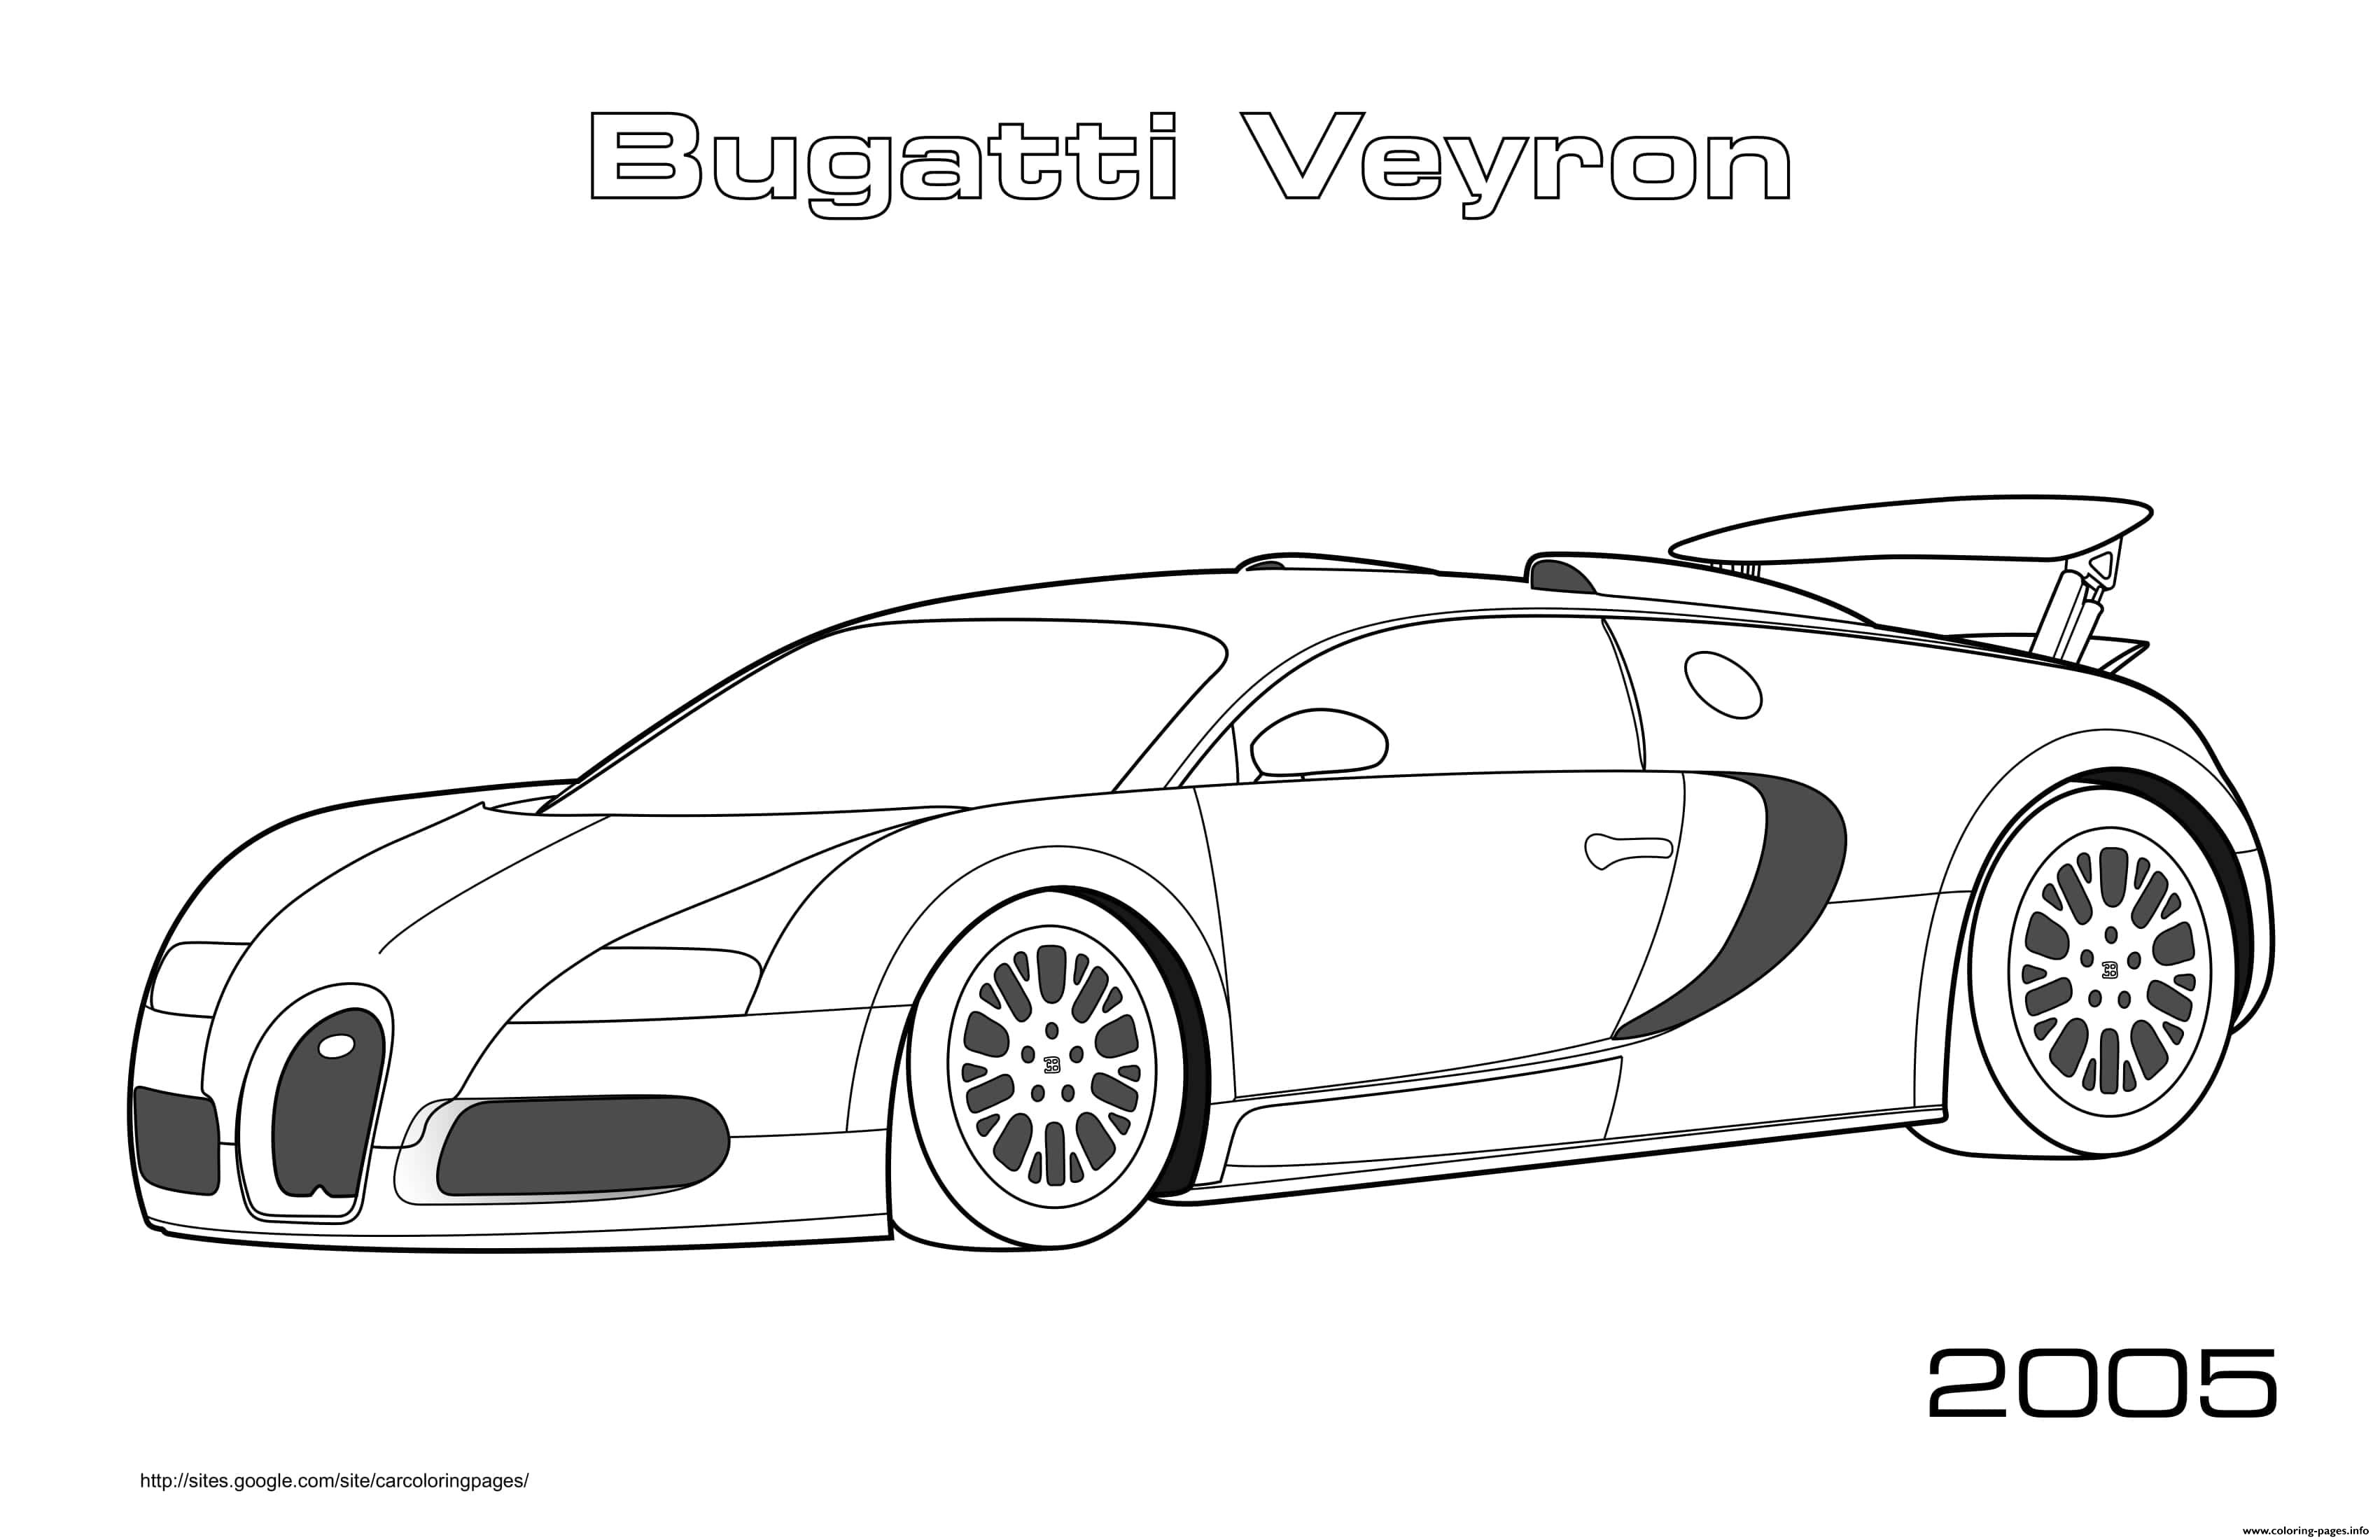 Bugatti Veyron 2005 coloring